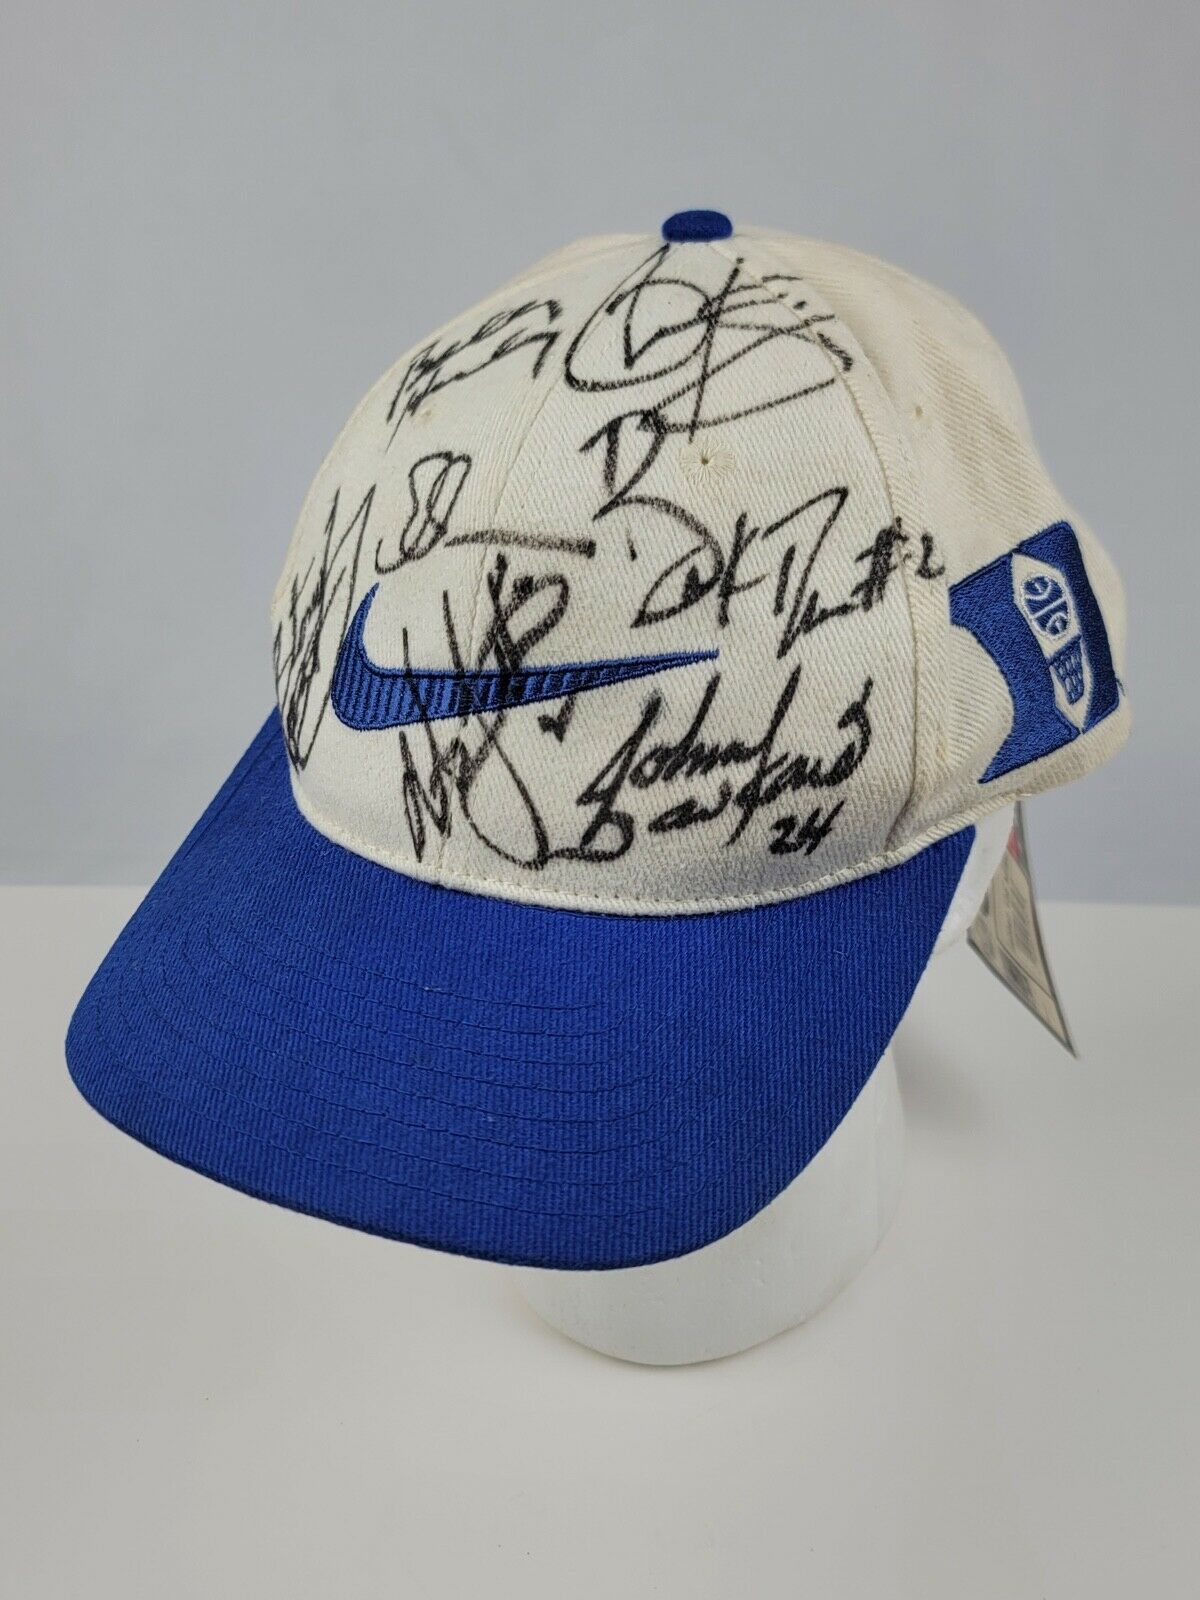 Primary image for NOS 1990's Nike Duke Snapback Hat w/ Autographs Dawkins, Hurley, Snyder, Quinn